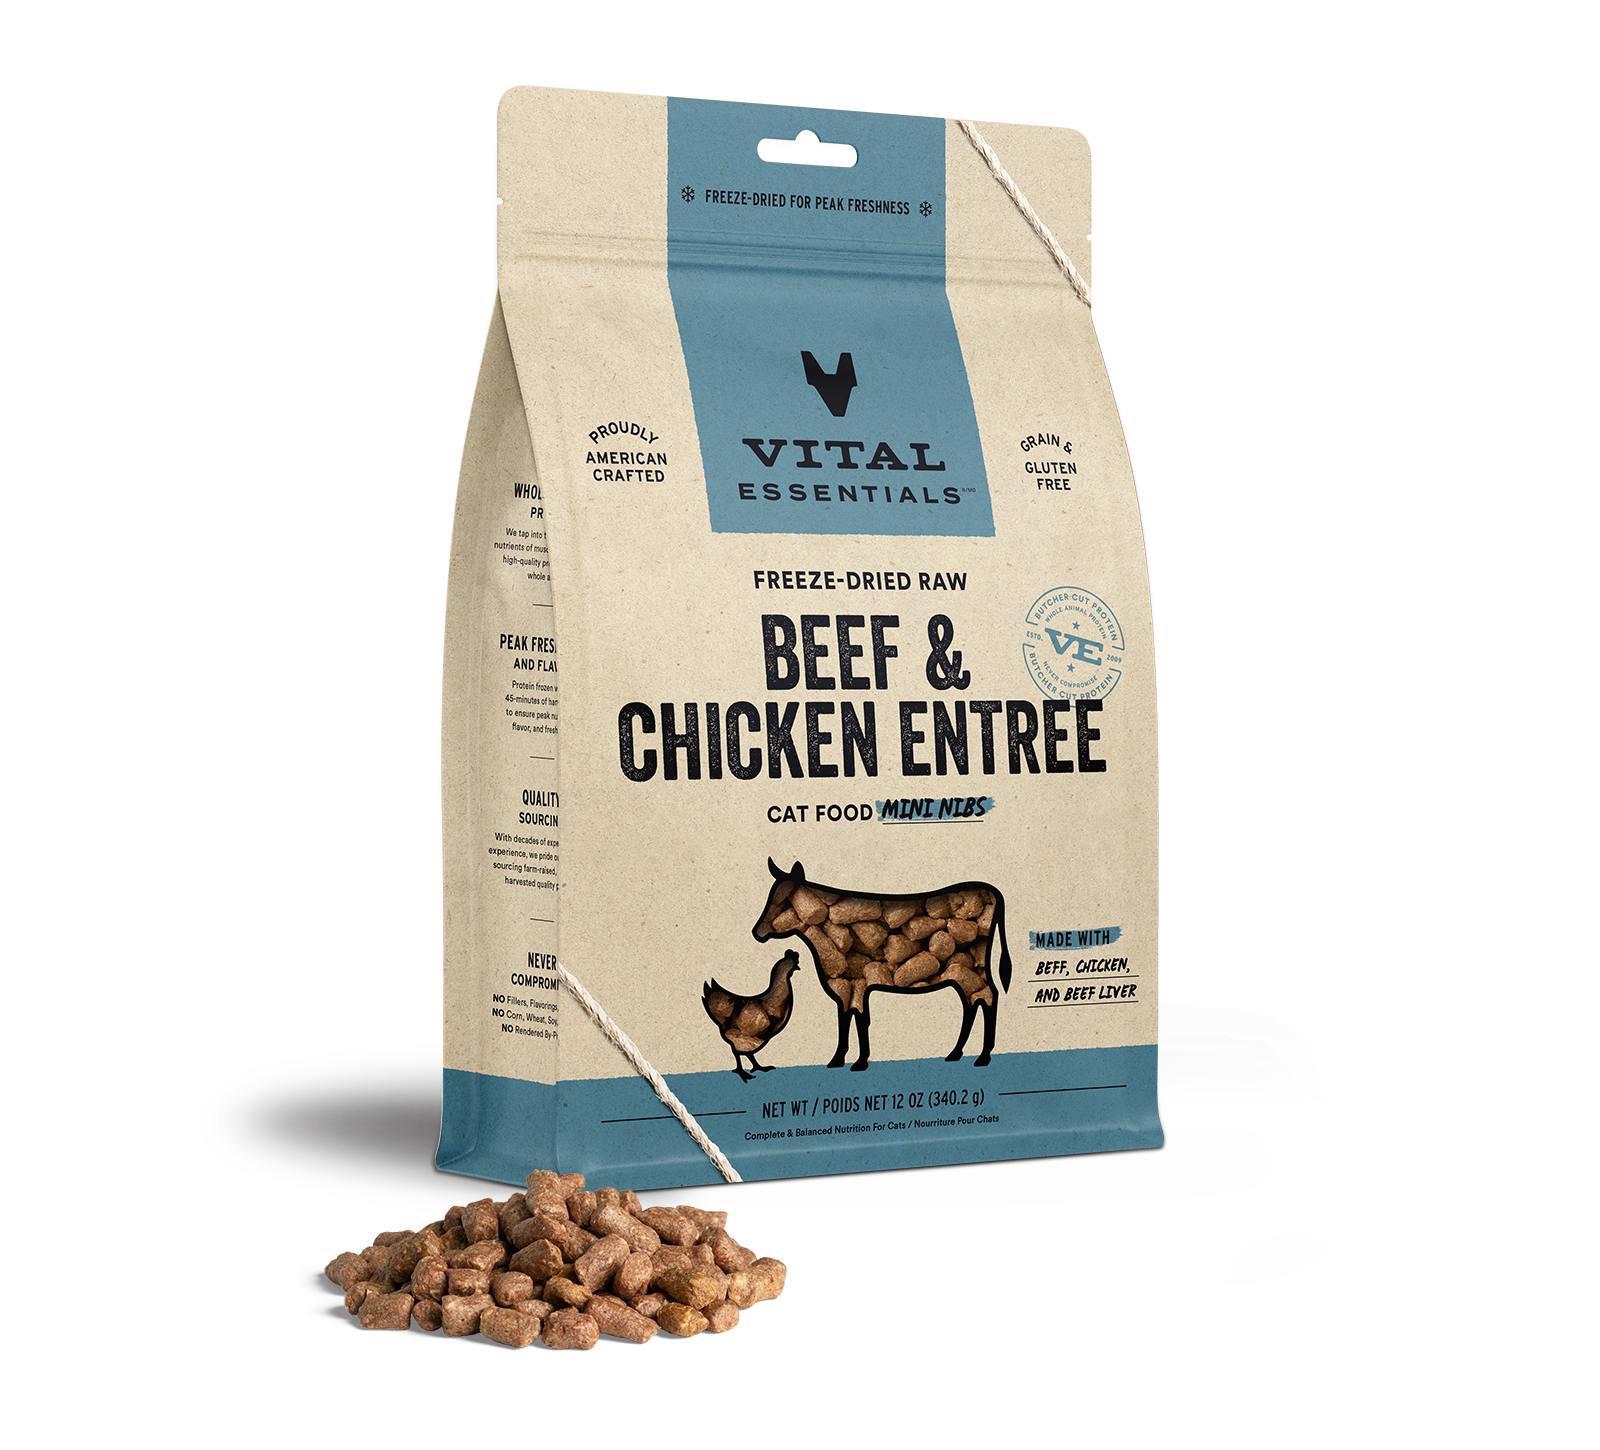 Vital Essentials Freeze-Dried Raw Beef & Chicken Entree Cat Food Mini Nibs, 12 oz - Items on Sale Now